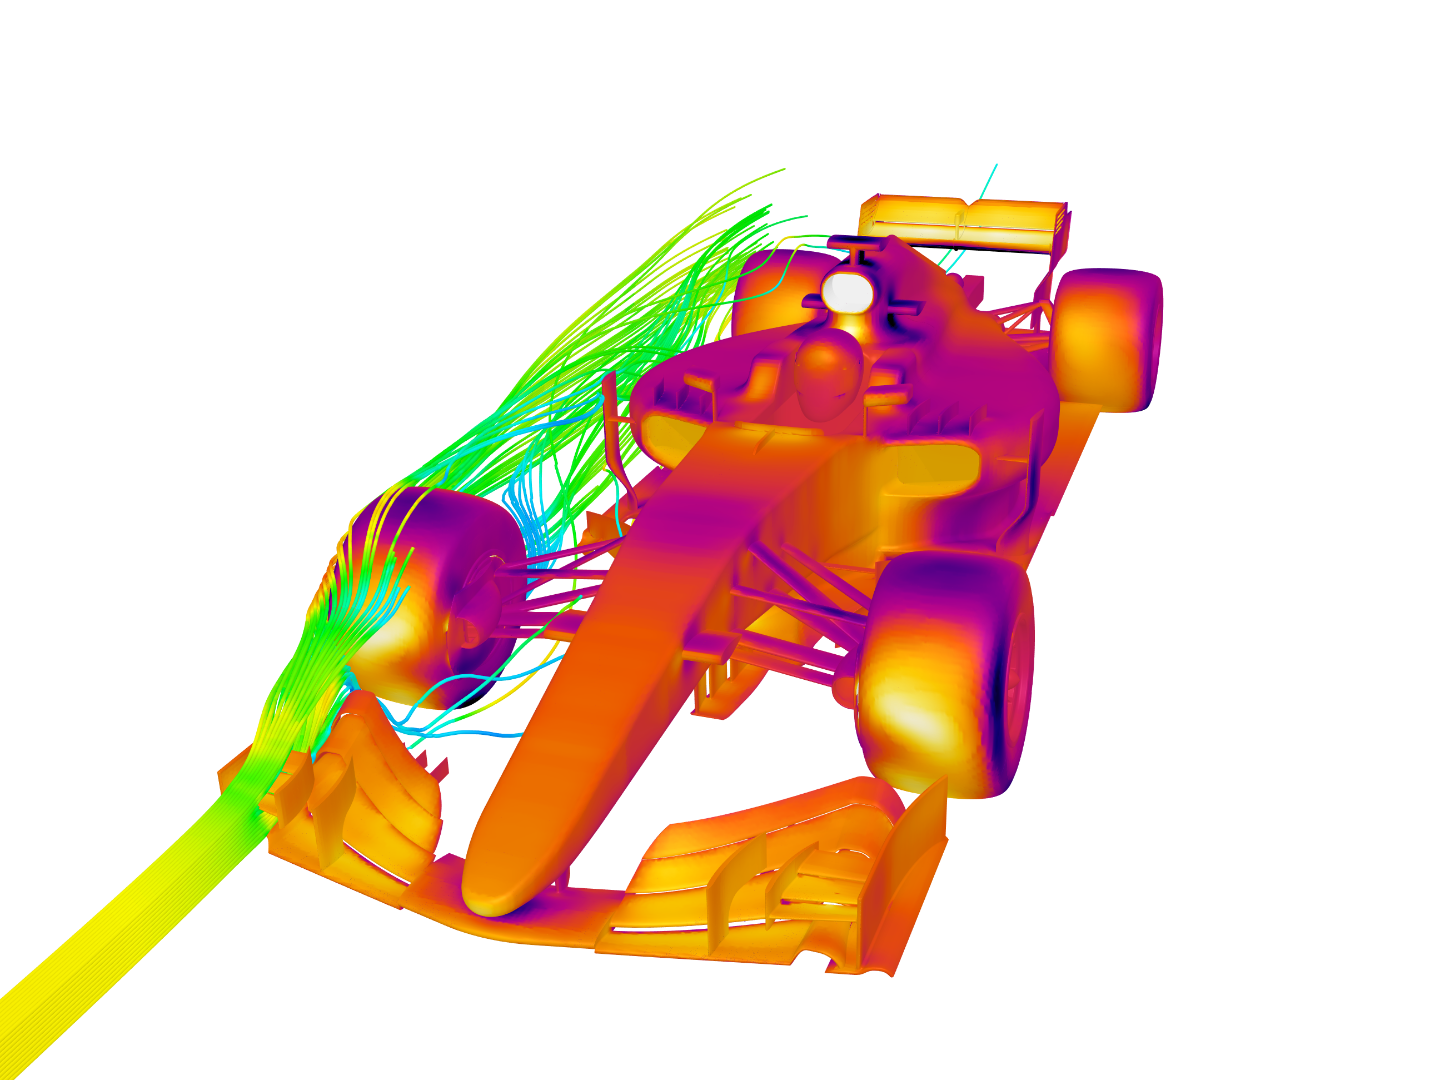 F1 analysis image